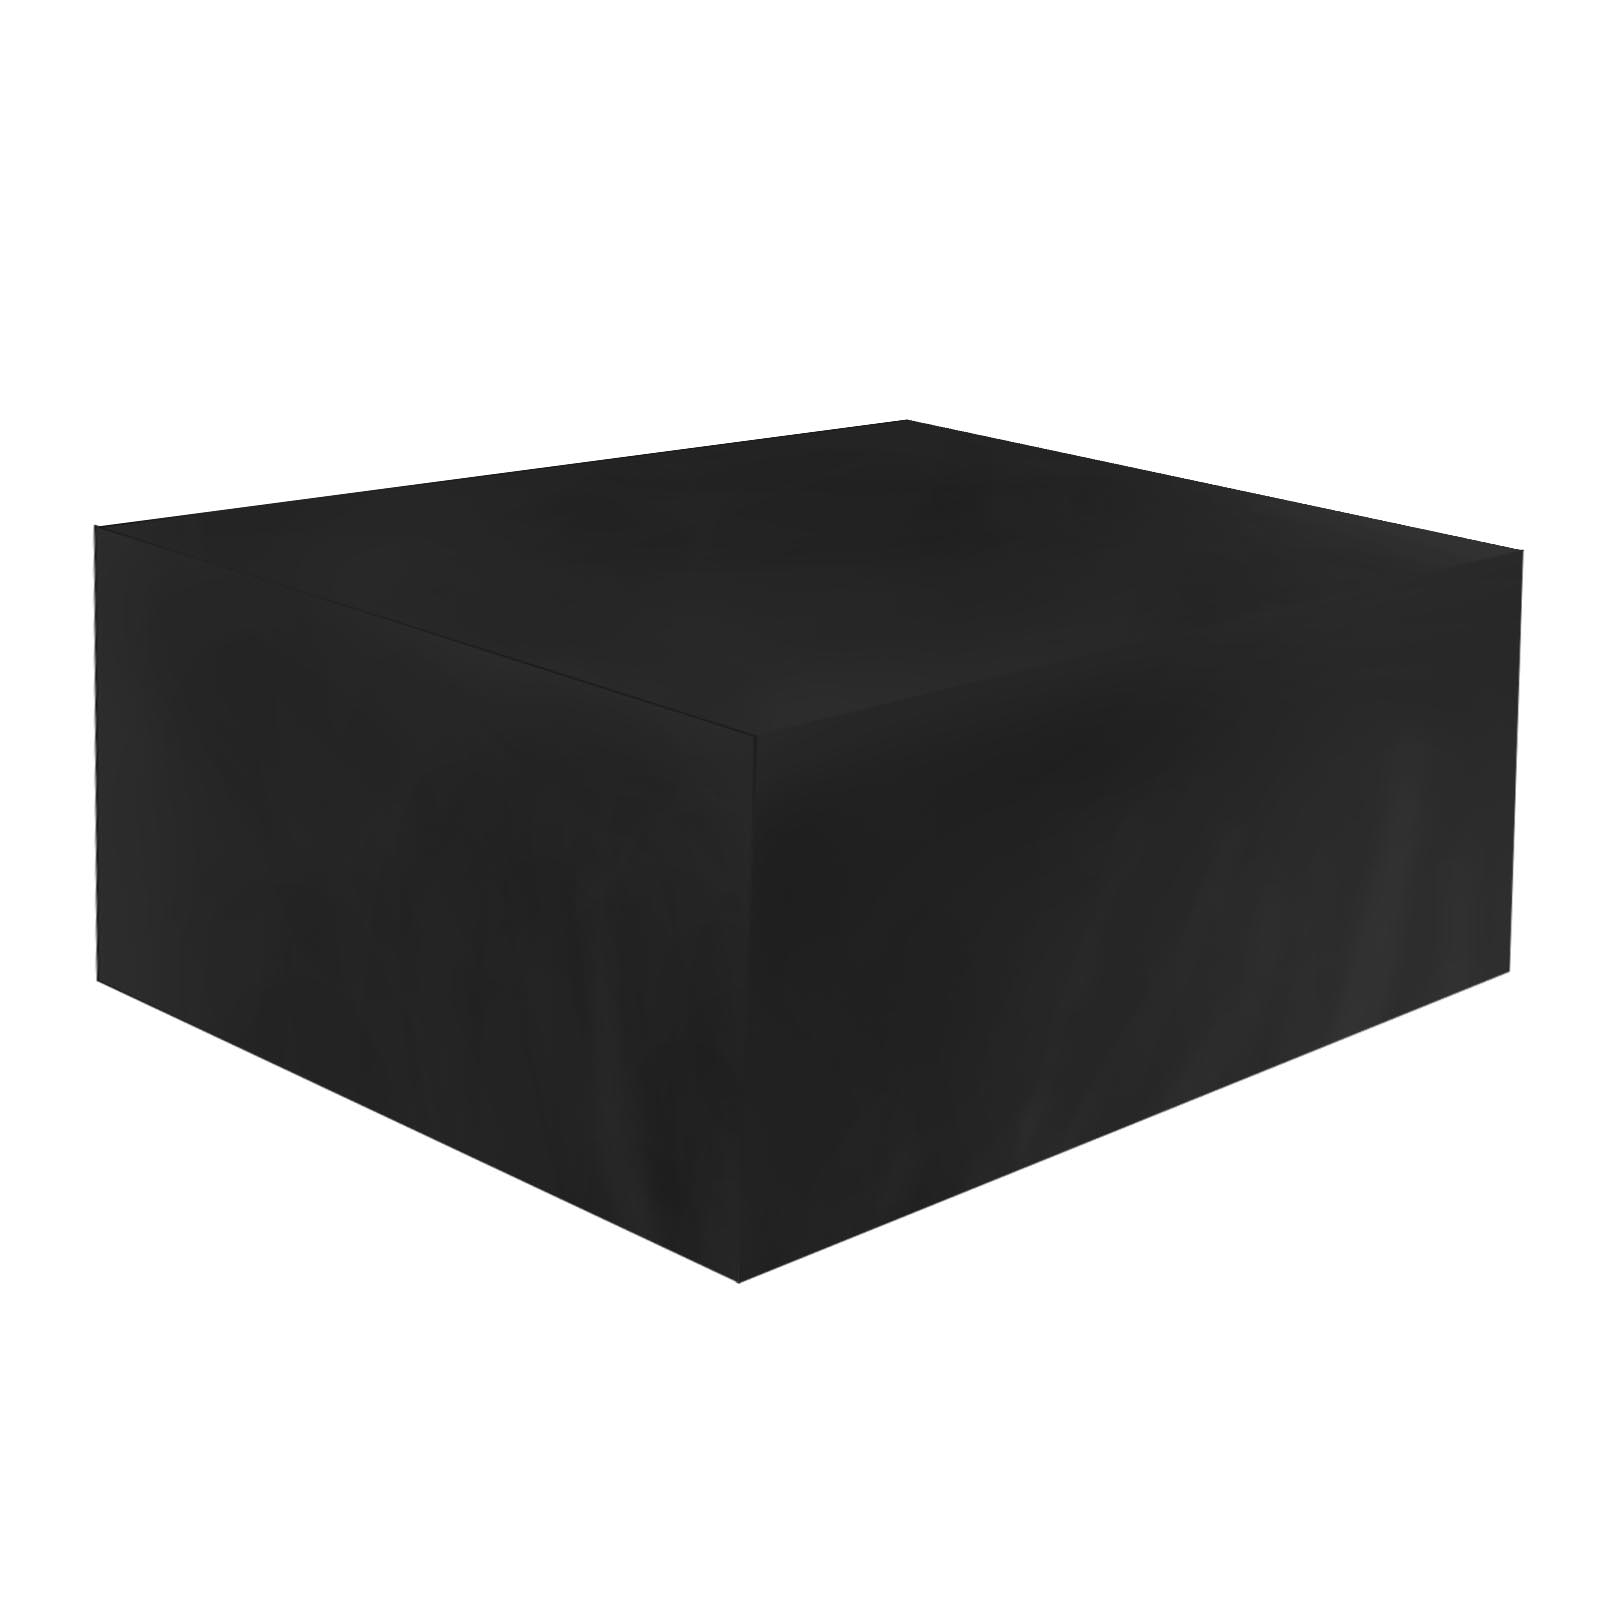 126*126*74cm Garden Outdoor Furniture Furniture Rattan Cube Set Cover